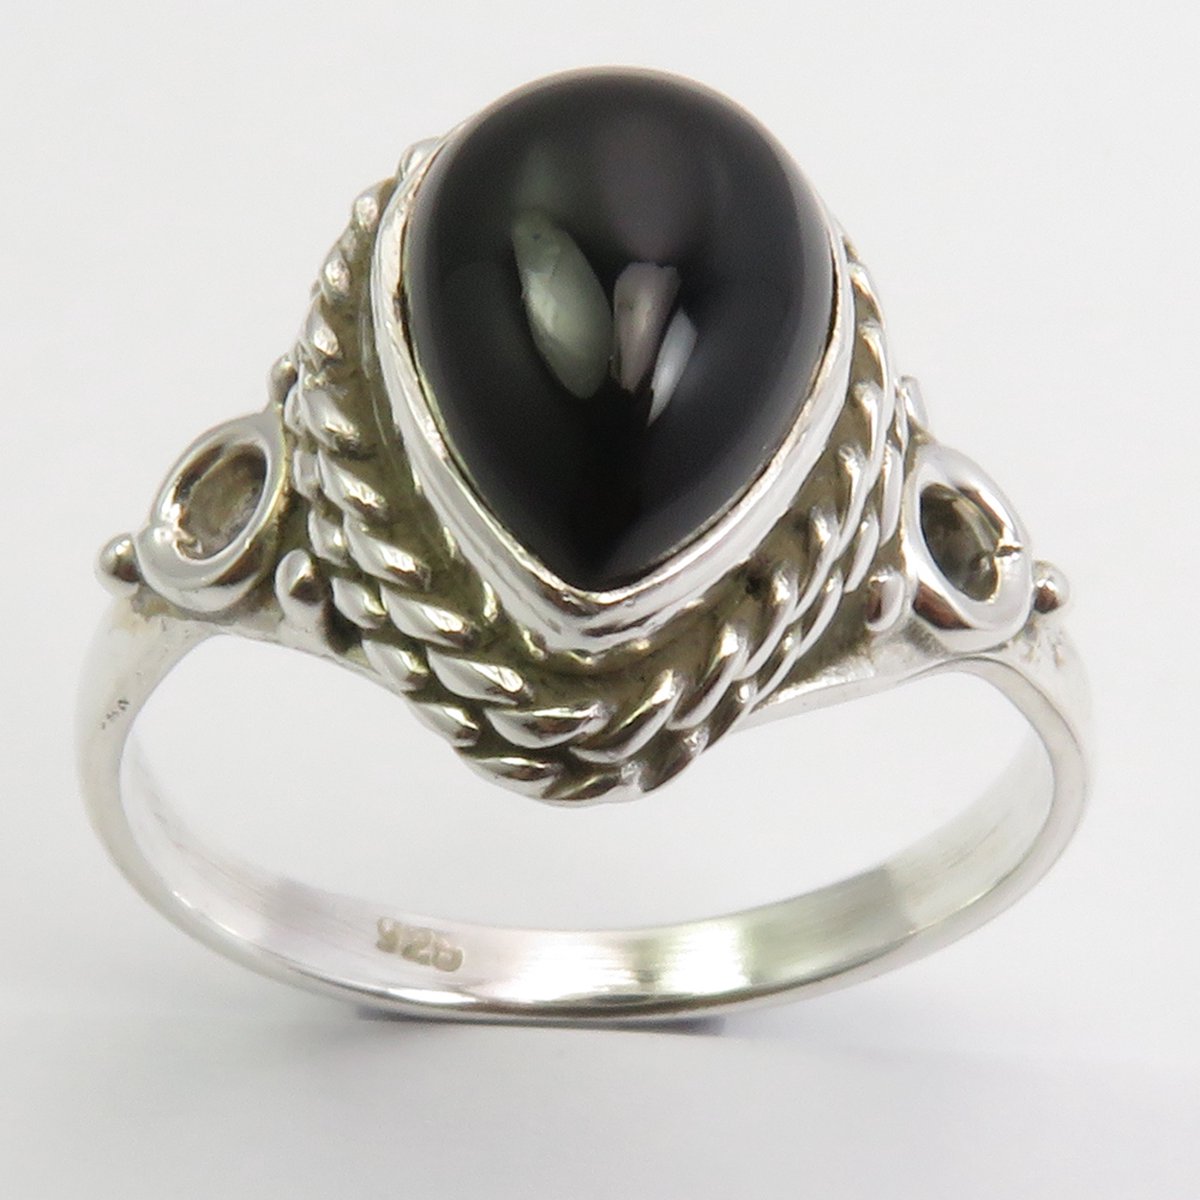 Natuursieraad - 925 sterling zilver onyx ring maat 18.25 MM - luxe edelsteen sieraad - handgemaakt